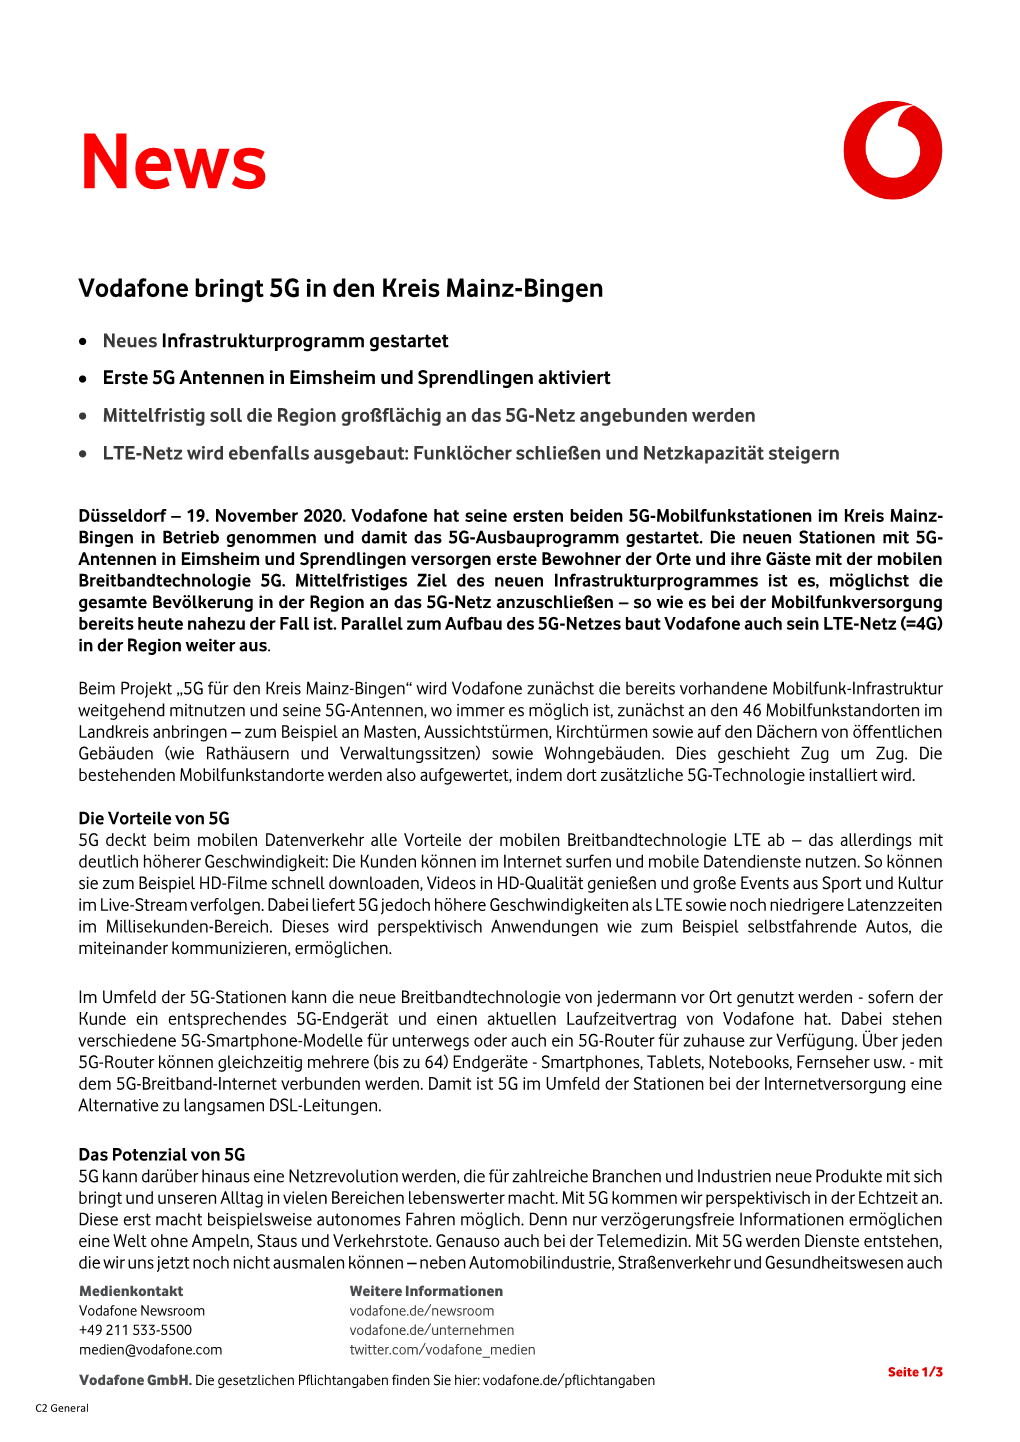 Vodafone Bringt 5G in Den Kreis Mainz-Bingen